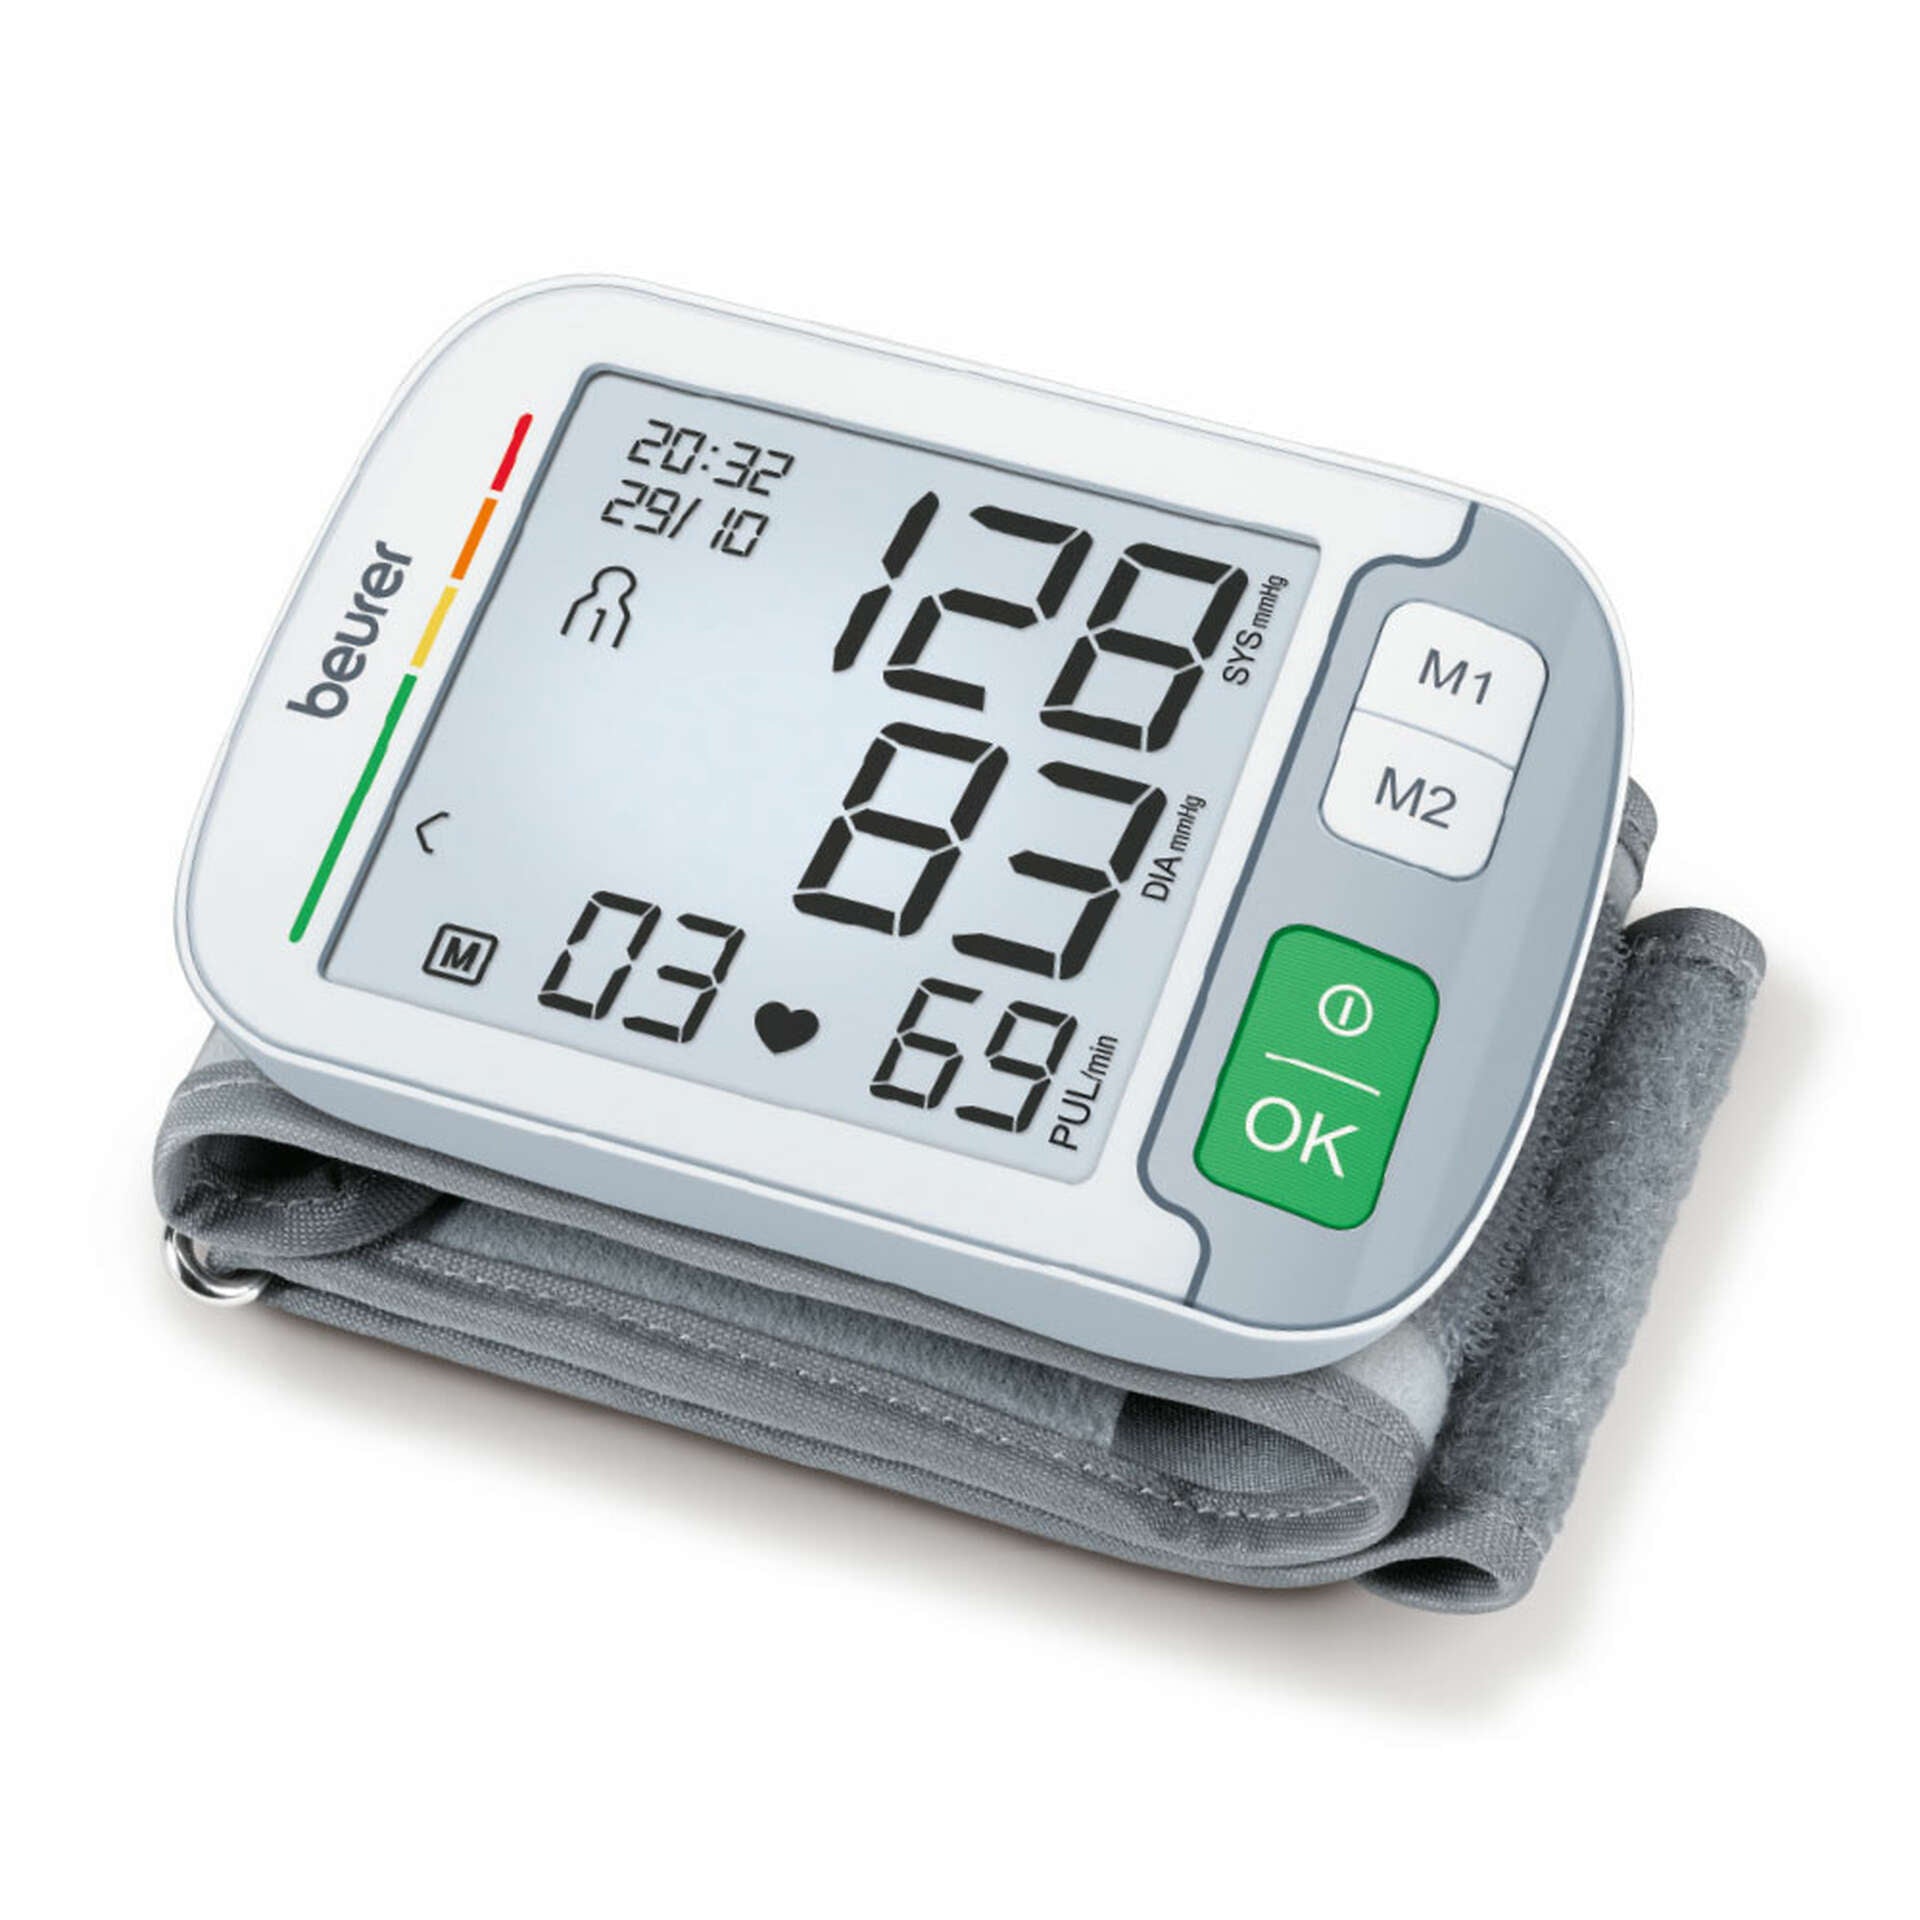 Beurer - Wrist Blood Pressure Monitor - Beurer Digital Wrist Type Blood Pressure Monitors in Pakistan